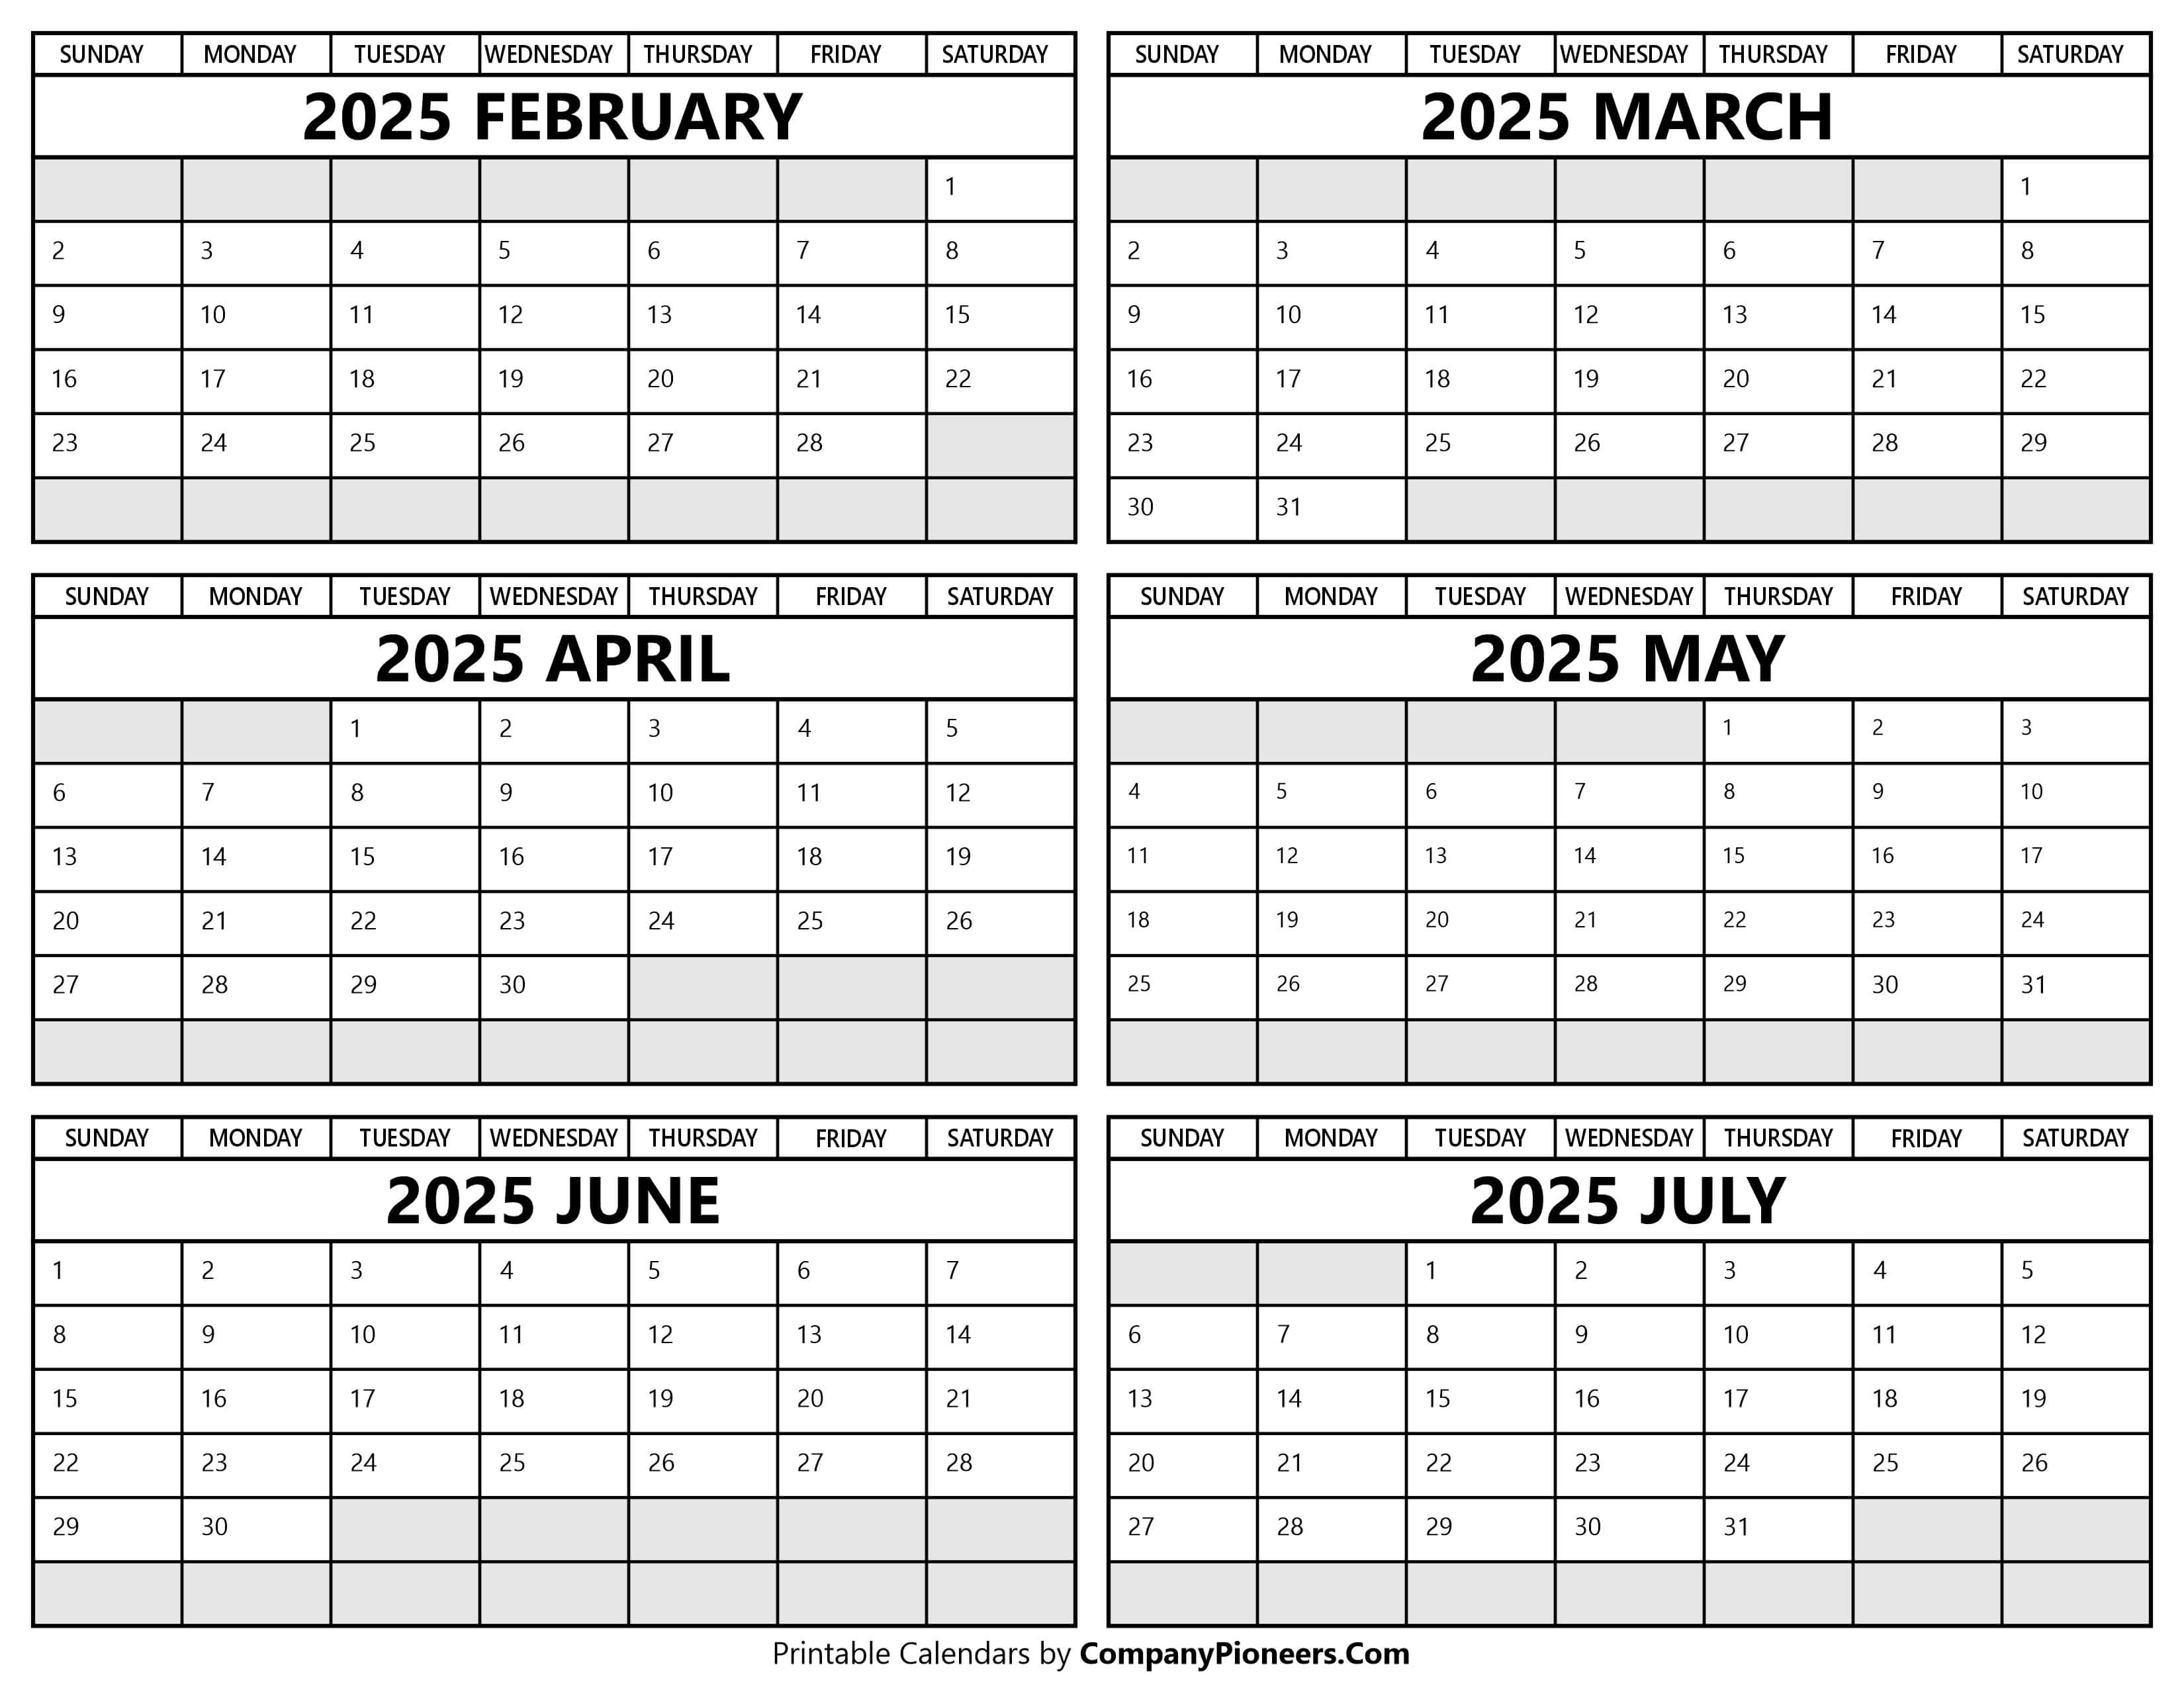 Printable 2025 February to July Calendar